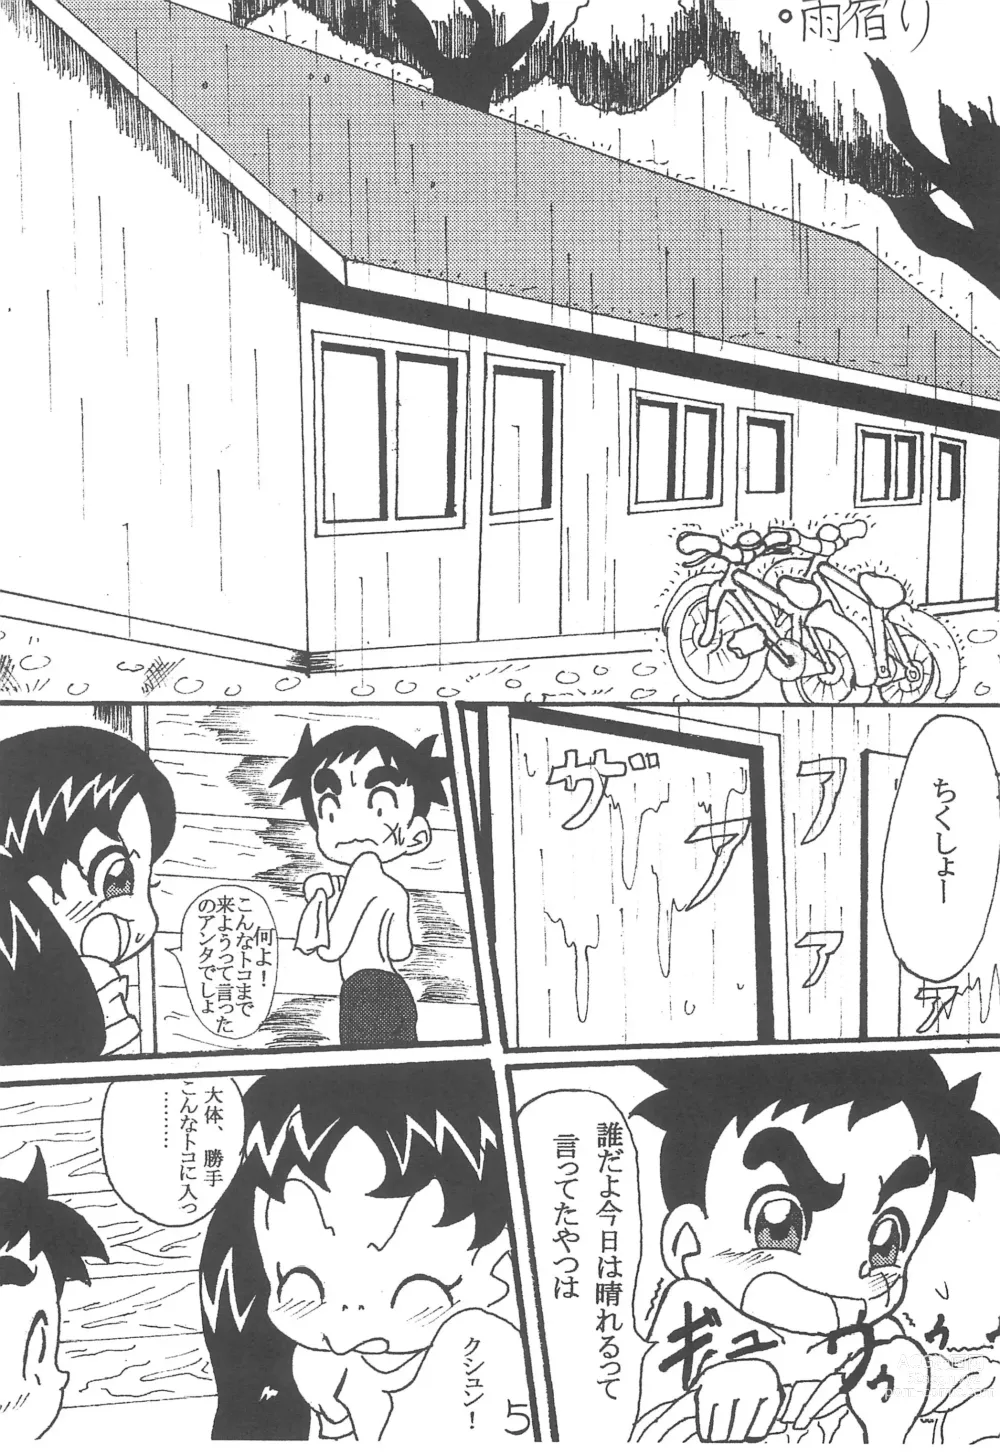 Page 5 of doujinshi Mou Hitotsu no Omoide